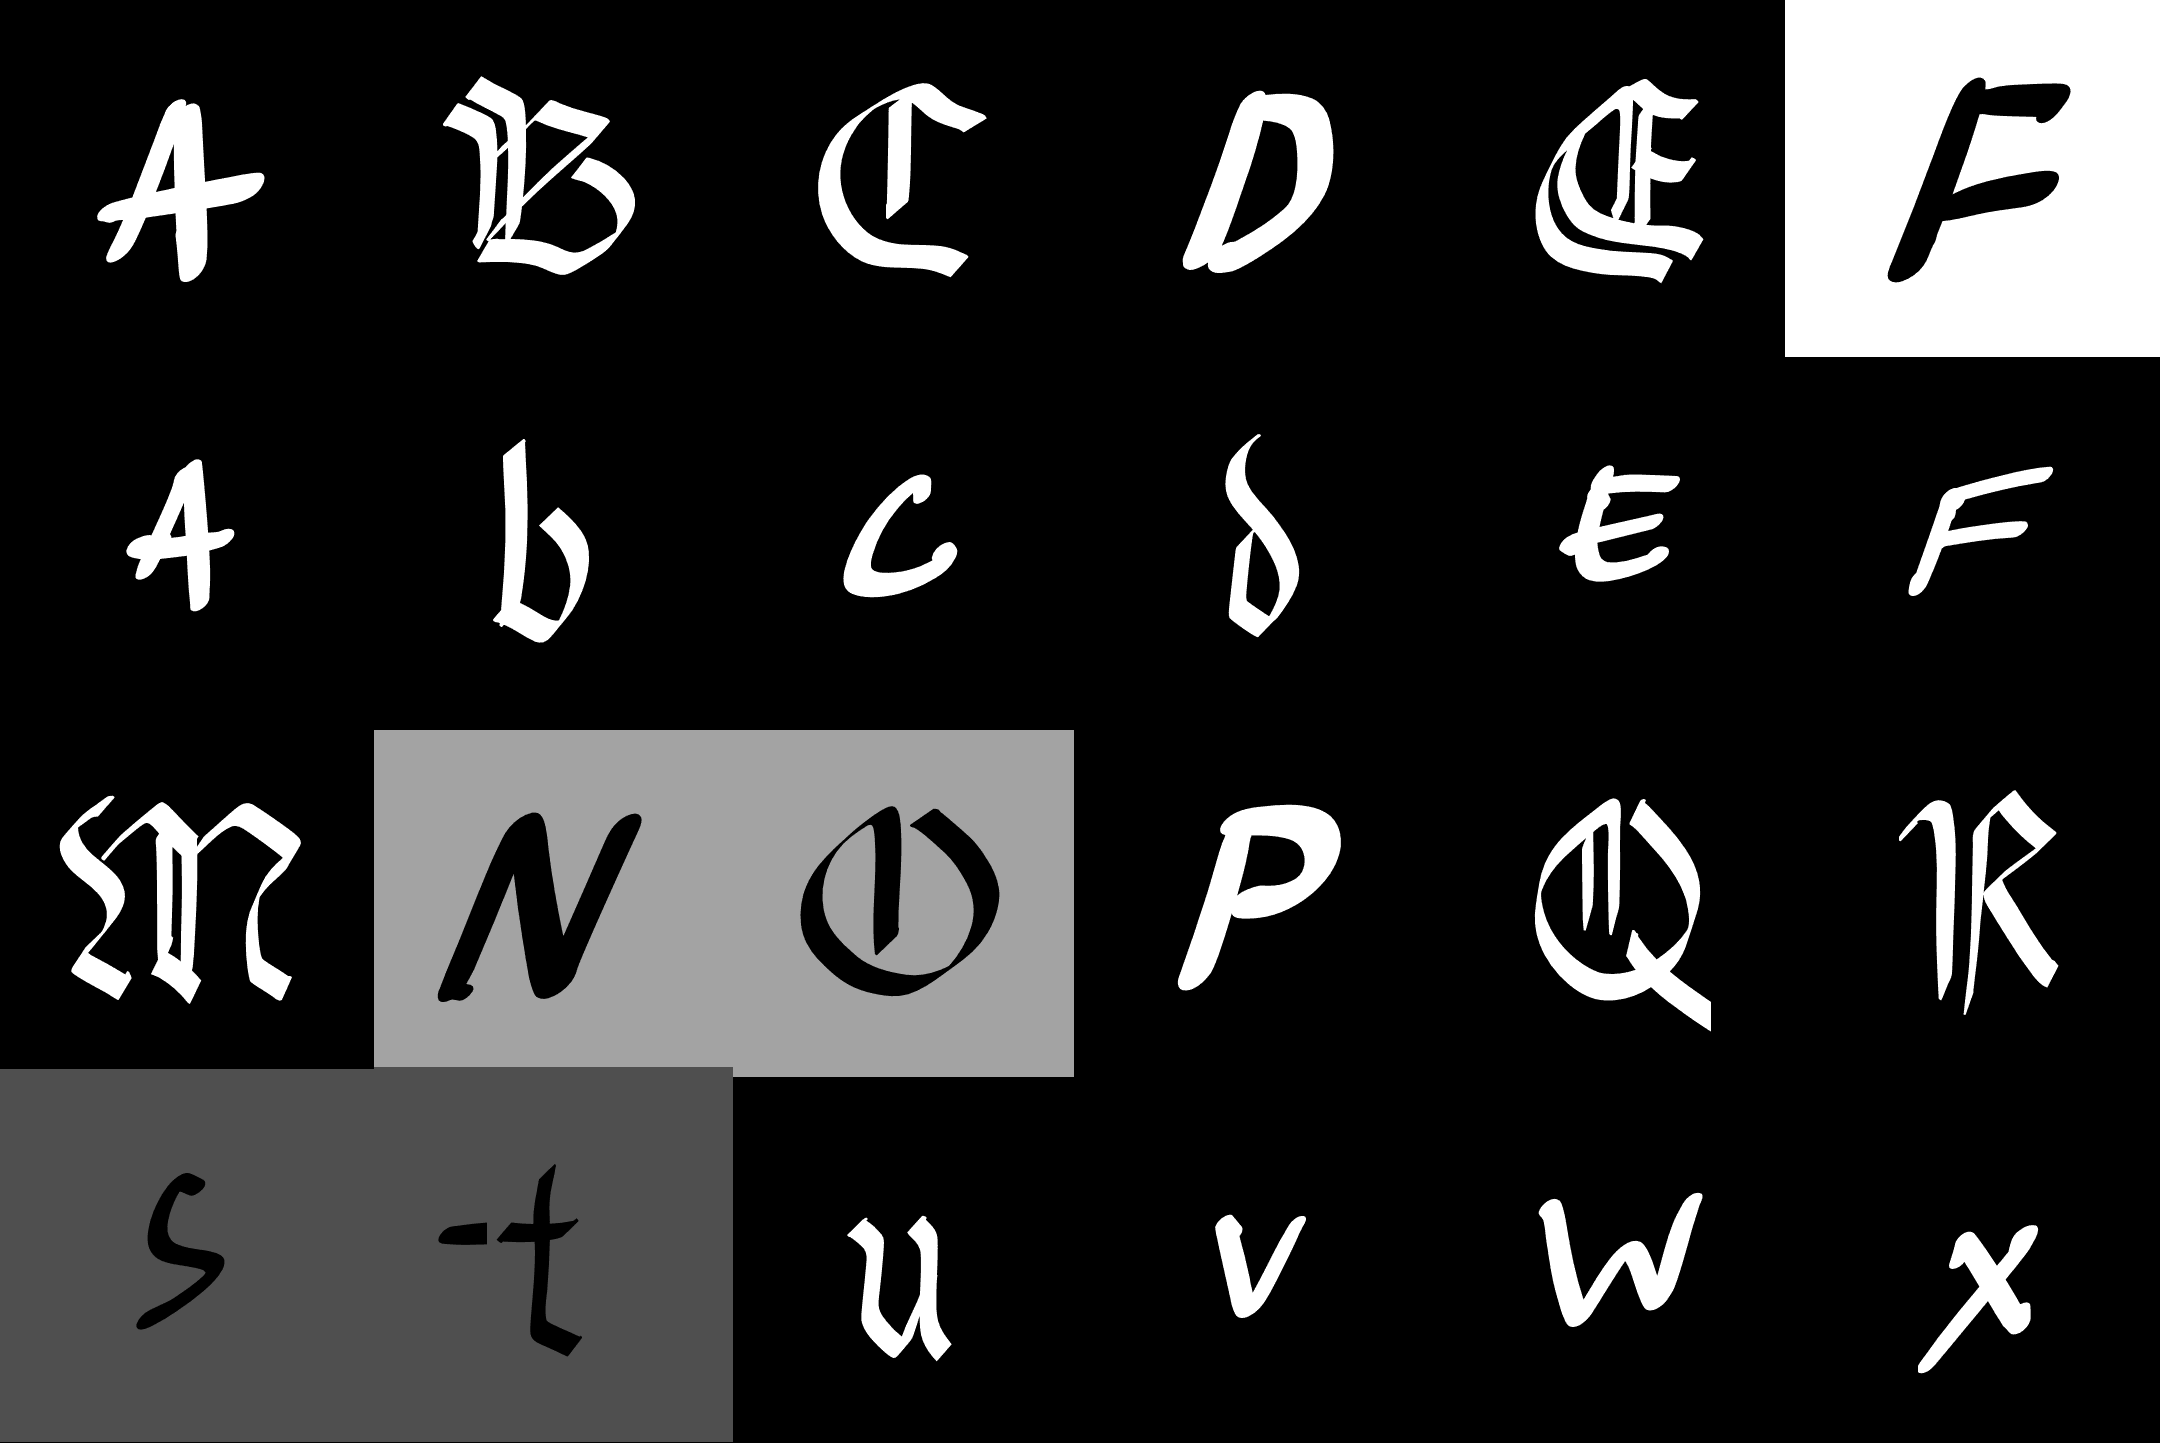 Hand Drawn Fonts